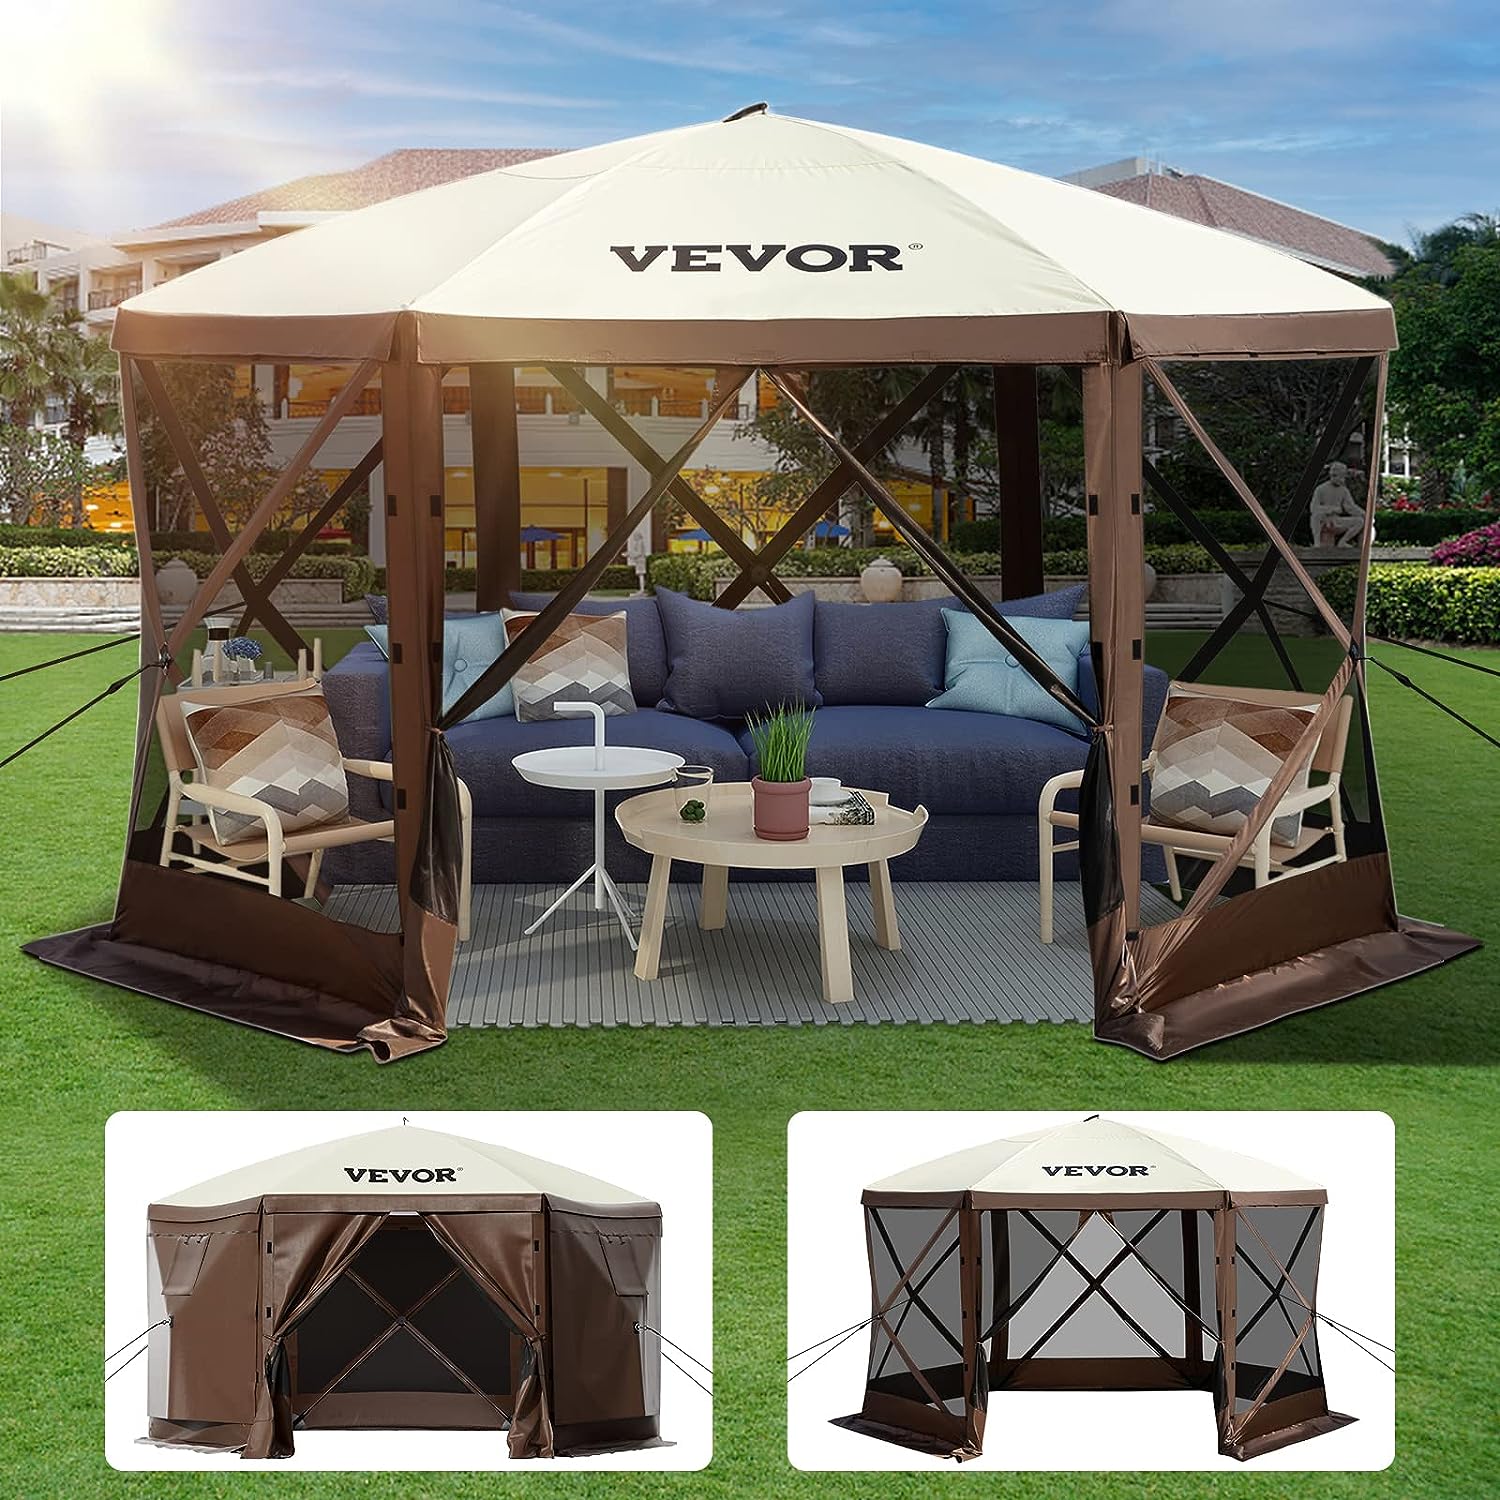 VEVOR VEVOR Pop-up Camping Gazebo Camping Canopy Shelter 6 Sided 10' x 10'  Sun Shade